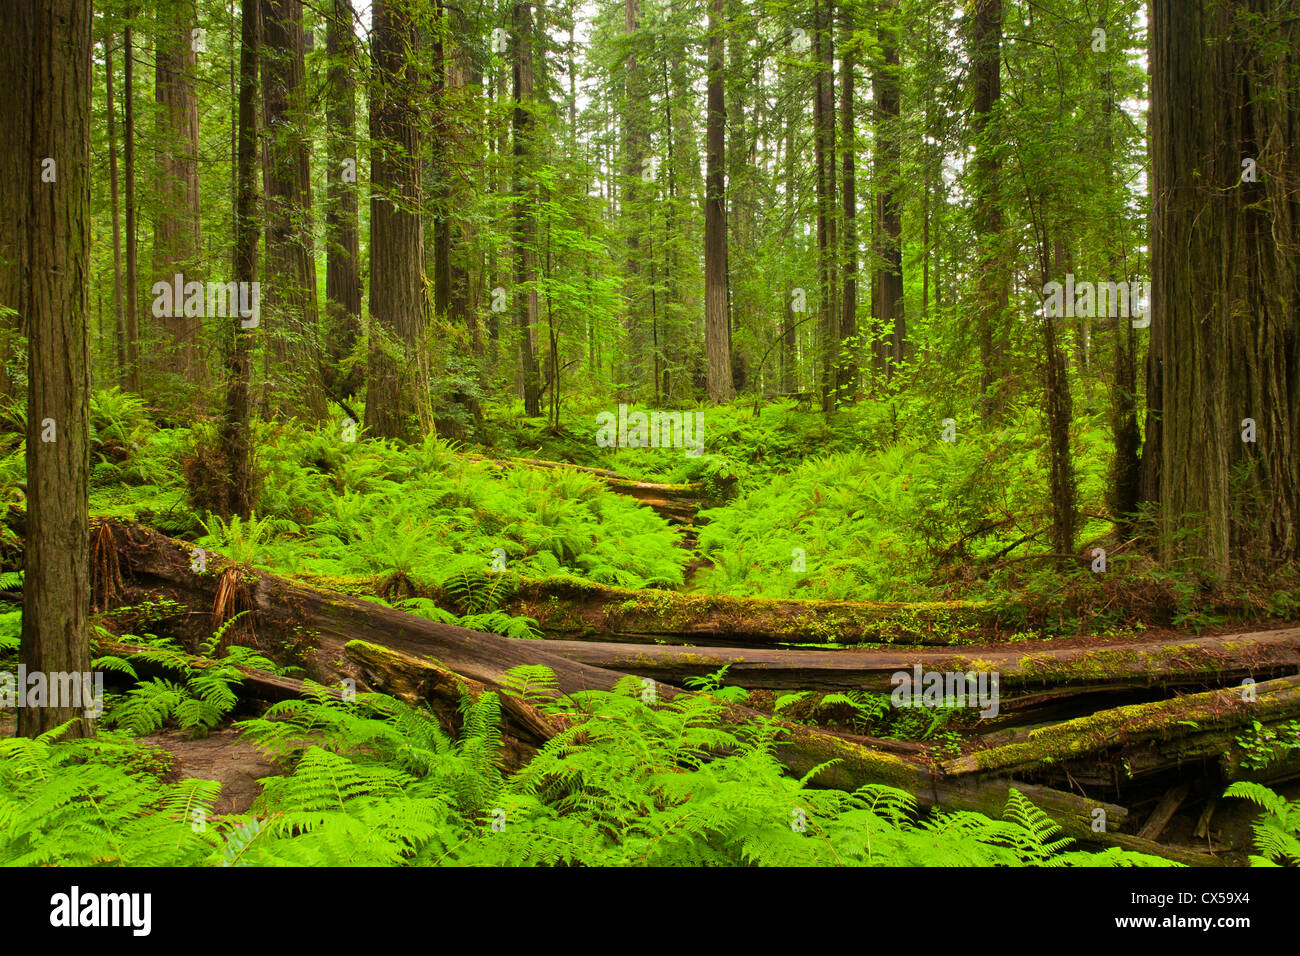 USA, California, Humboldt Redwoods State Park. Bracken ferns (Pteridium aquilinum) & redwoods (Sequoia sempervirens). Stock Photo